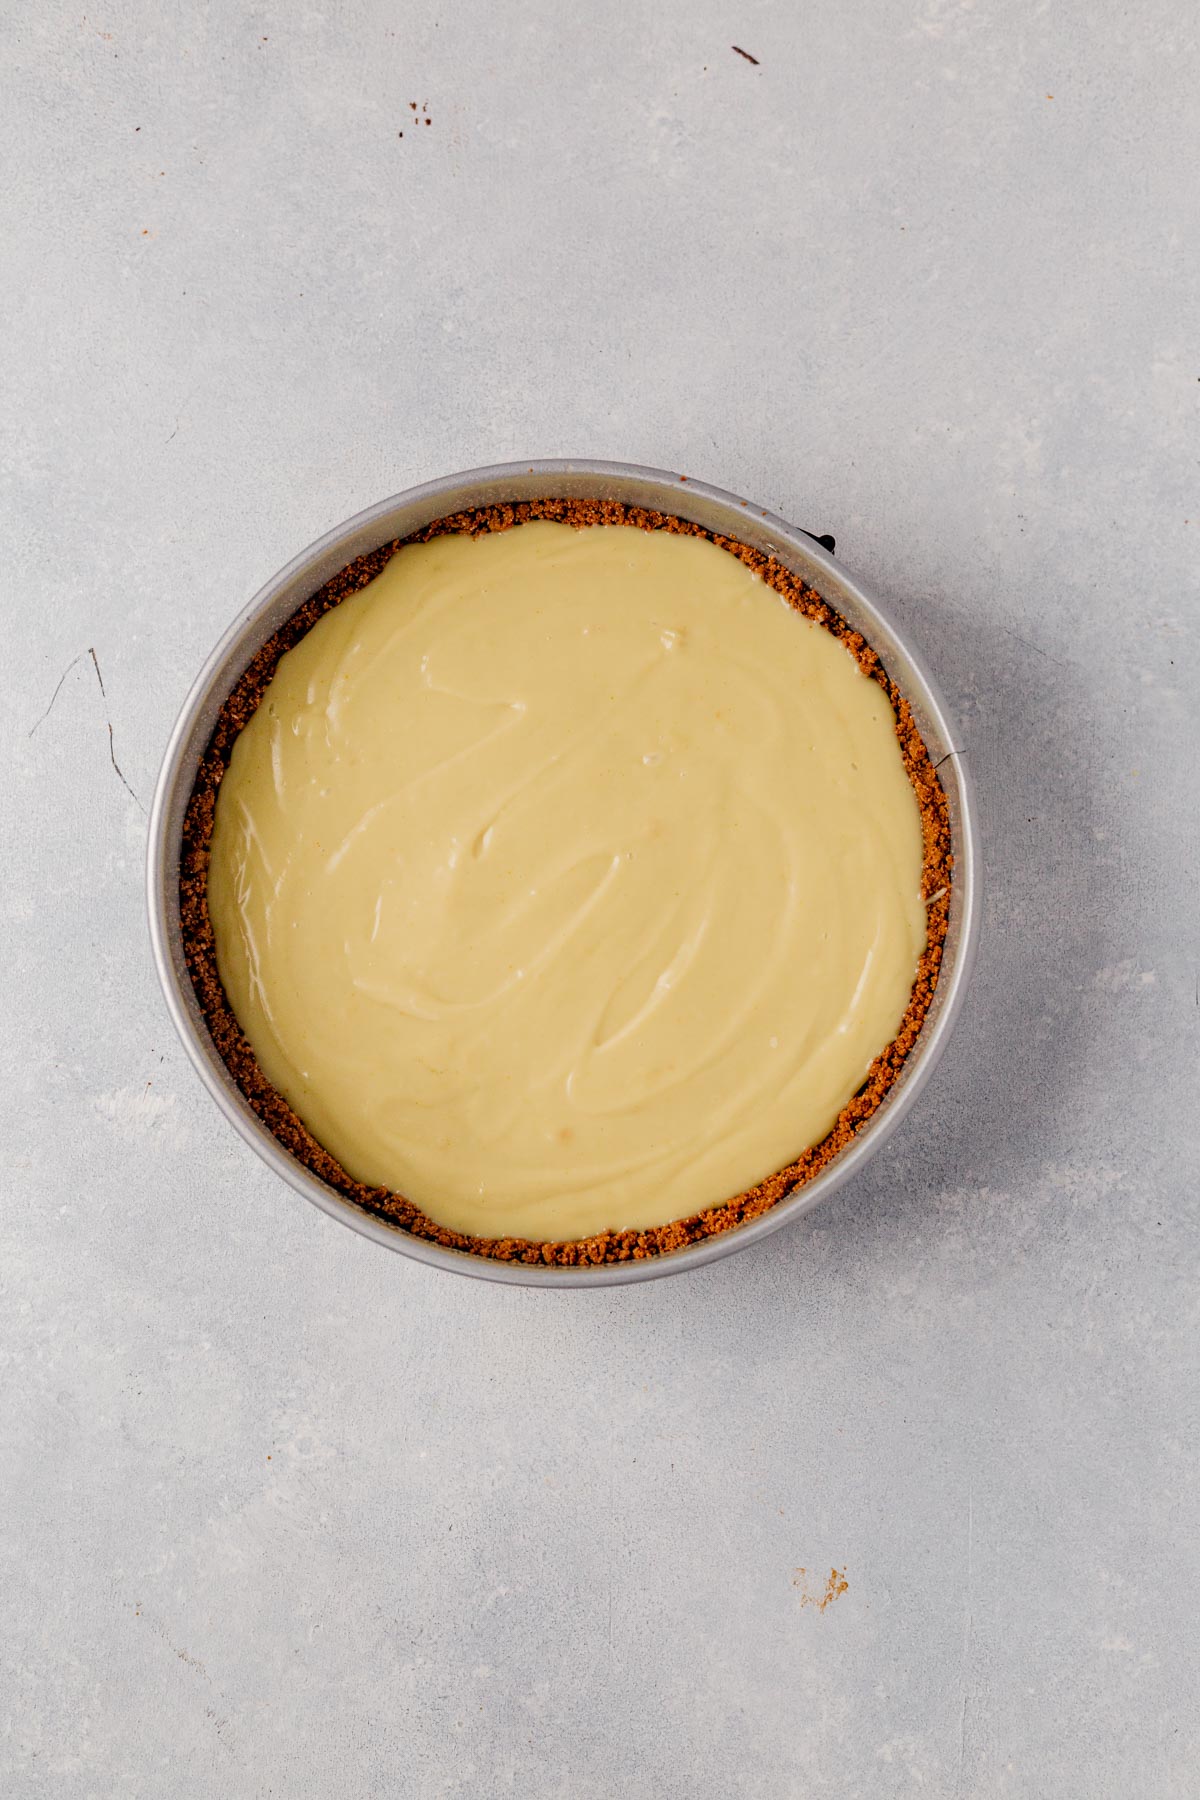 vegan vanilla pudding on top of pie crust and sliced bananas